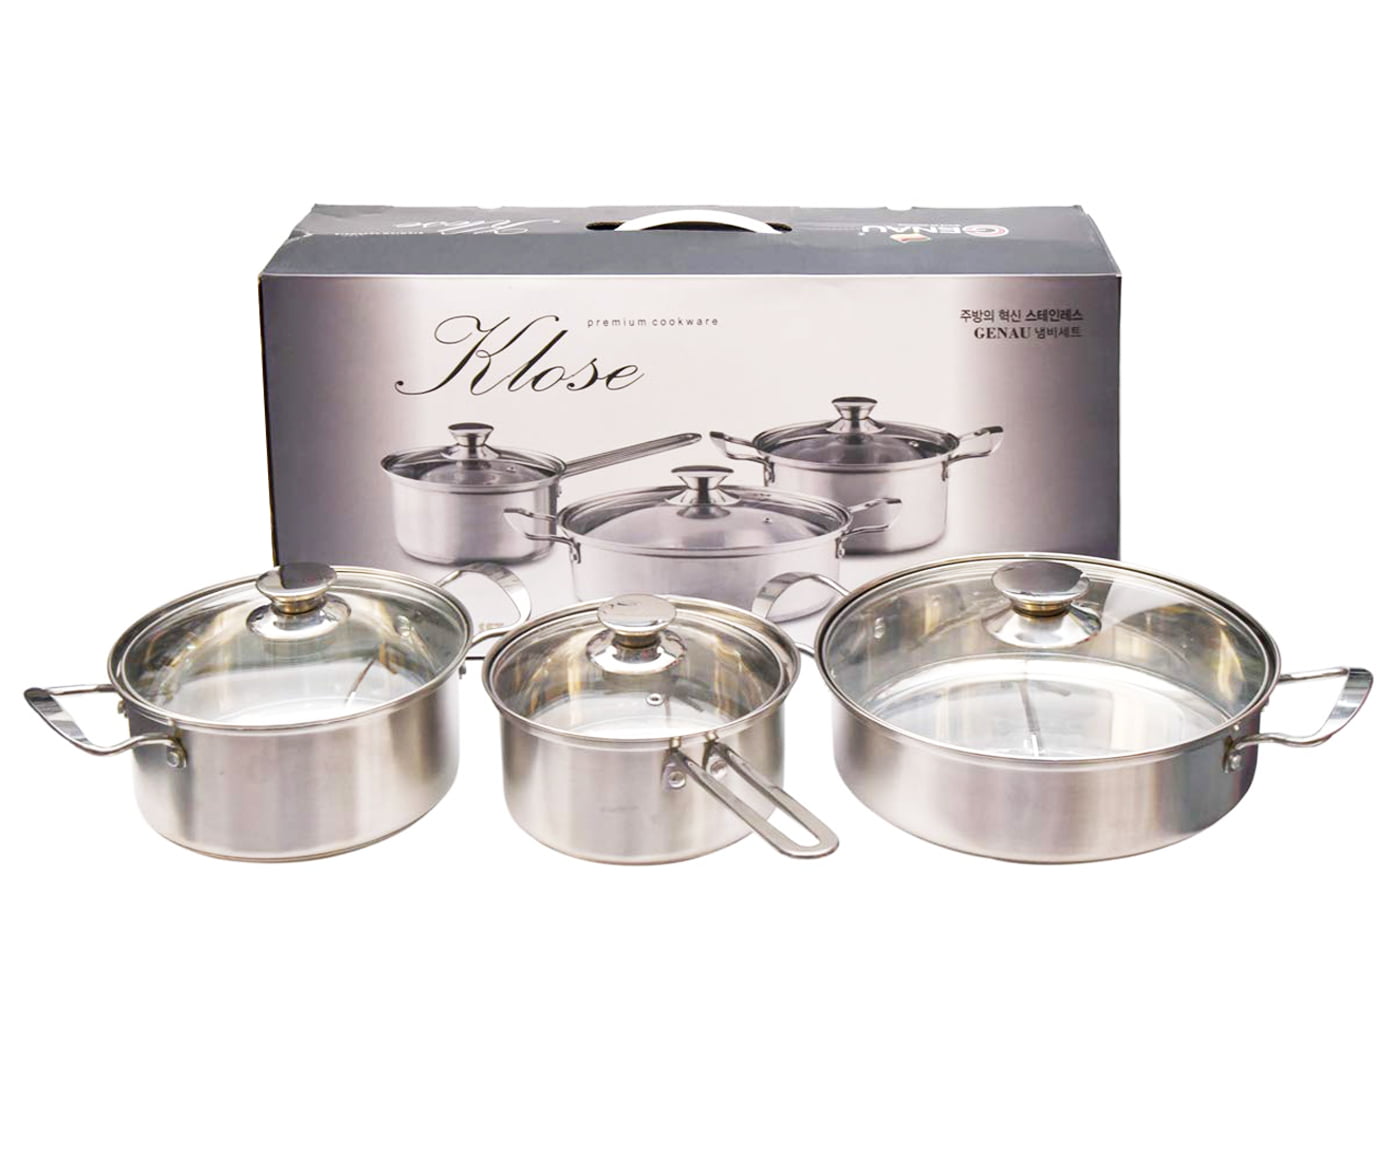 Details about   6 PCS Stainless Steel Cookware Set Nonstick Pot & Pans W/ Glass Lids Home Silver 